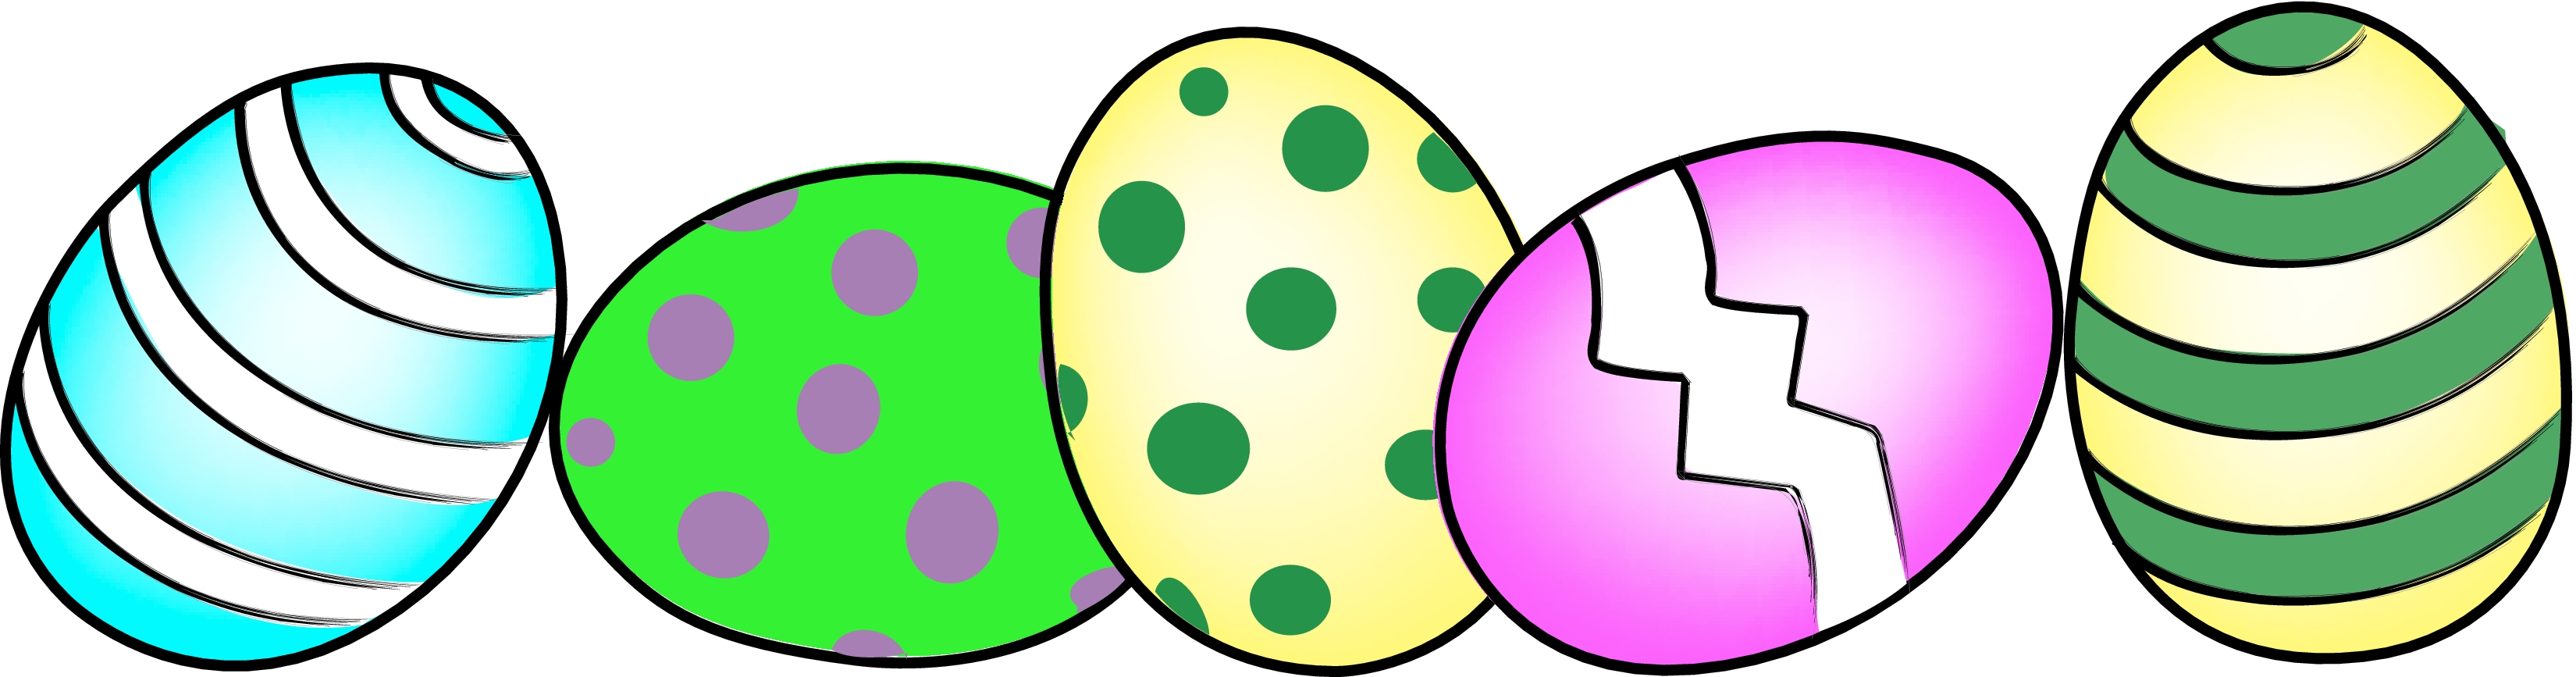 easter egg clipart - Easter Egg Images Clip Art